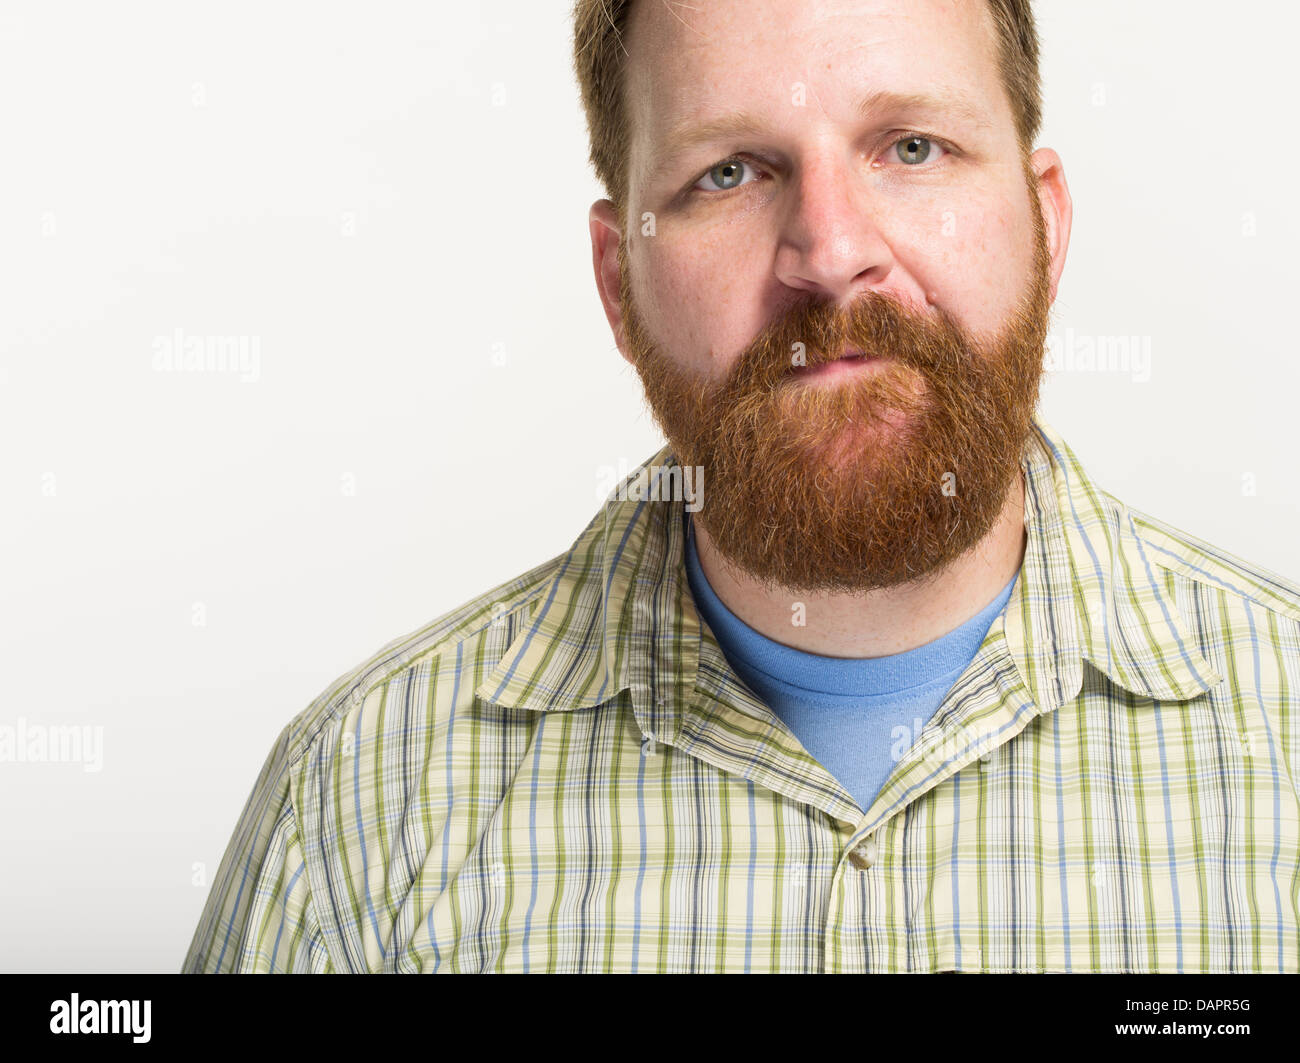 Man with beard looking tired / sleepy Stock Photo